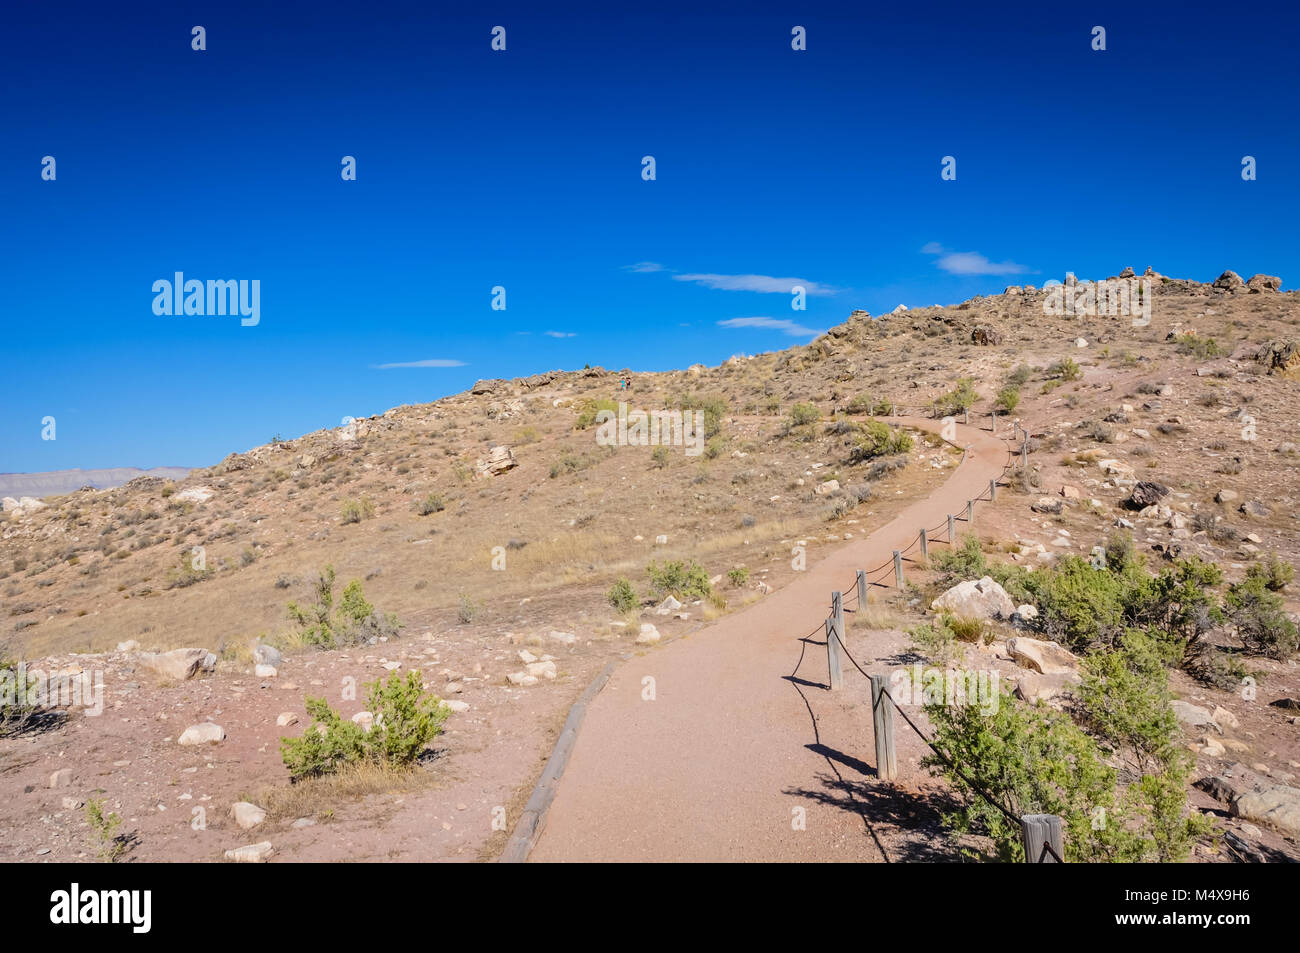 Schmutz weg in Felsen übersät Wüste bei Dinosaur Hügel in Colorado National Monument. Stockfoto